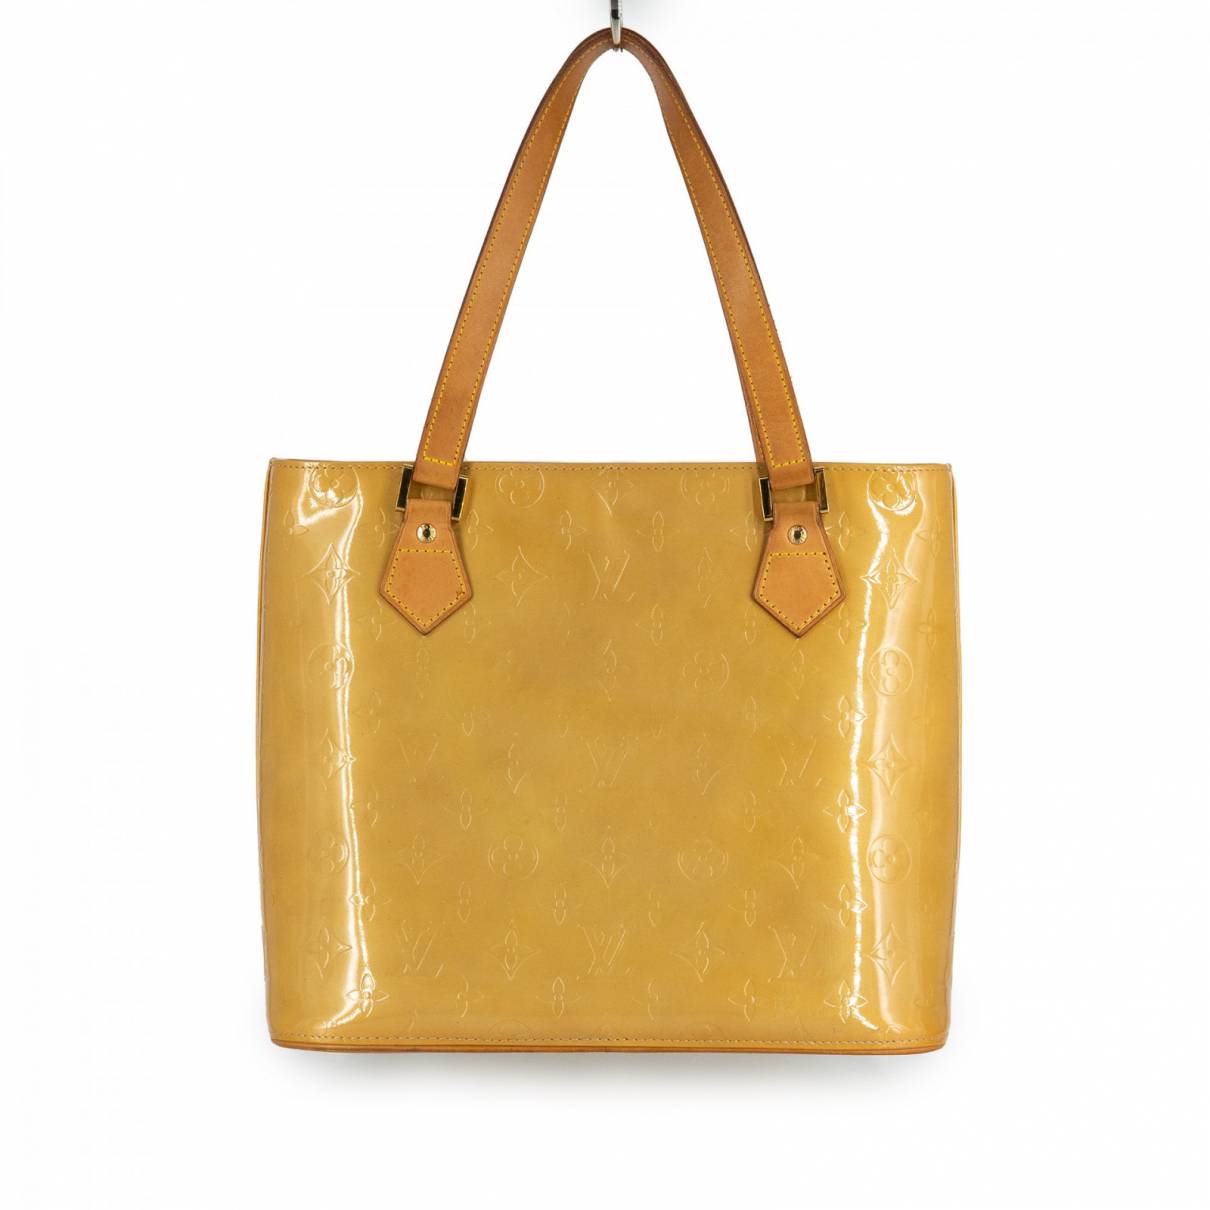 Buy Louis Vuitton Houston patent leather handbag online